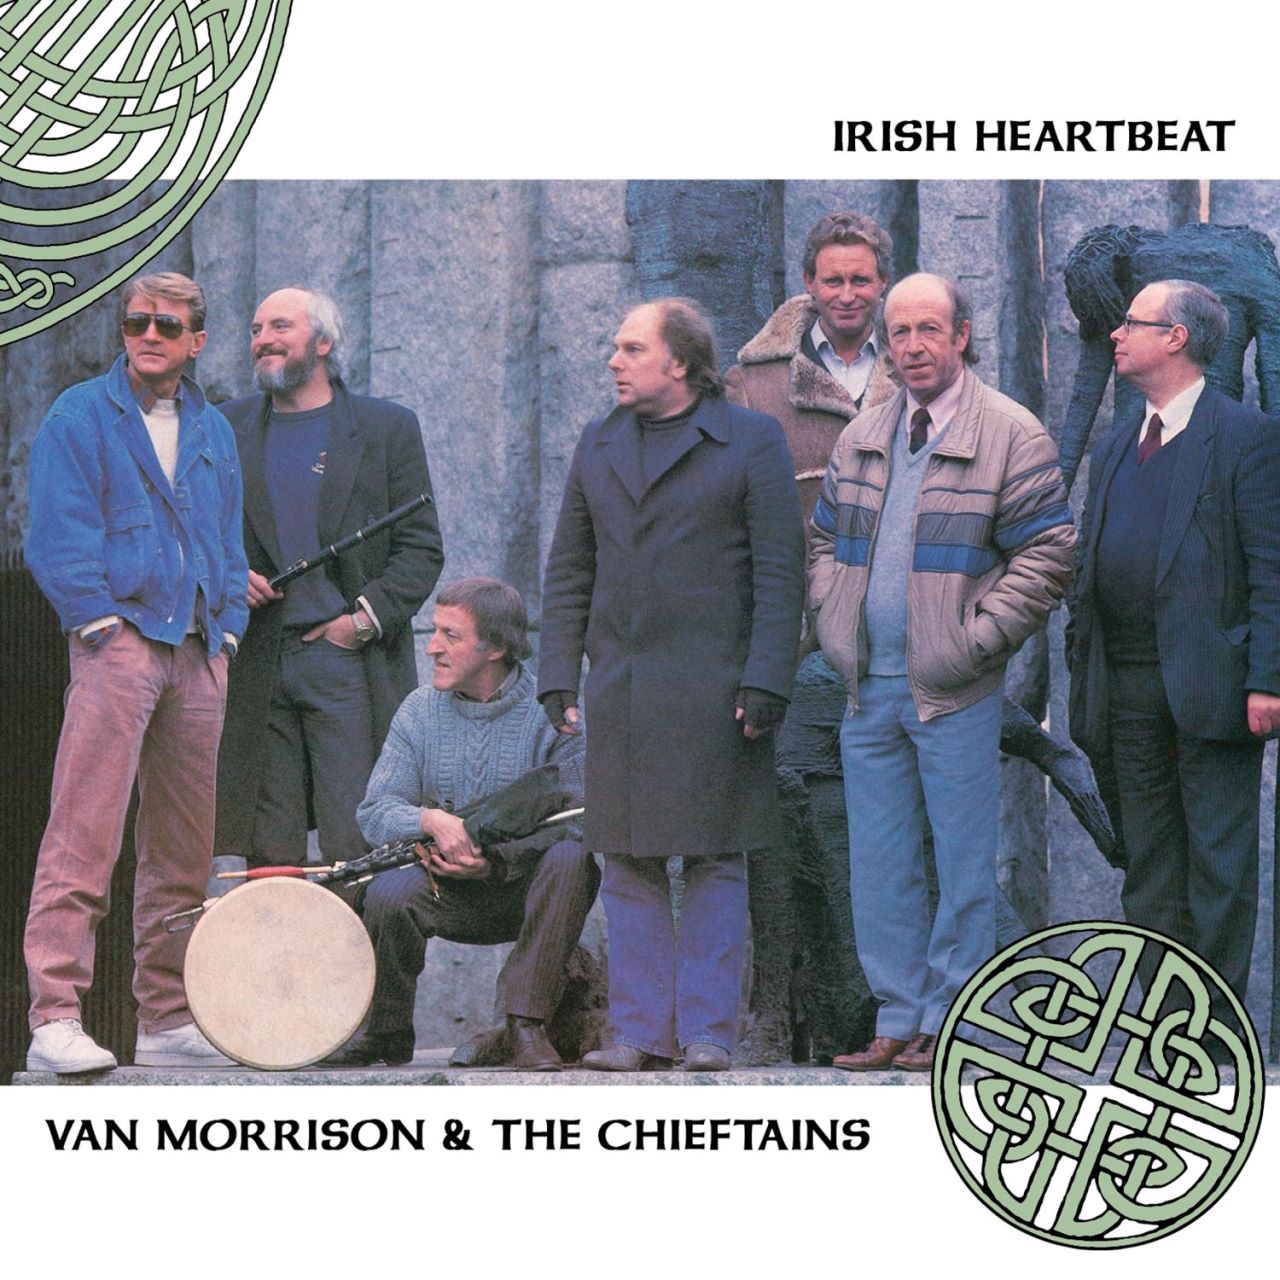 Van Morrison & The Chieftains - Irish Heartbeat cover album